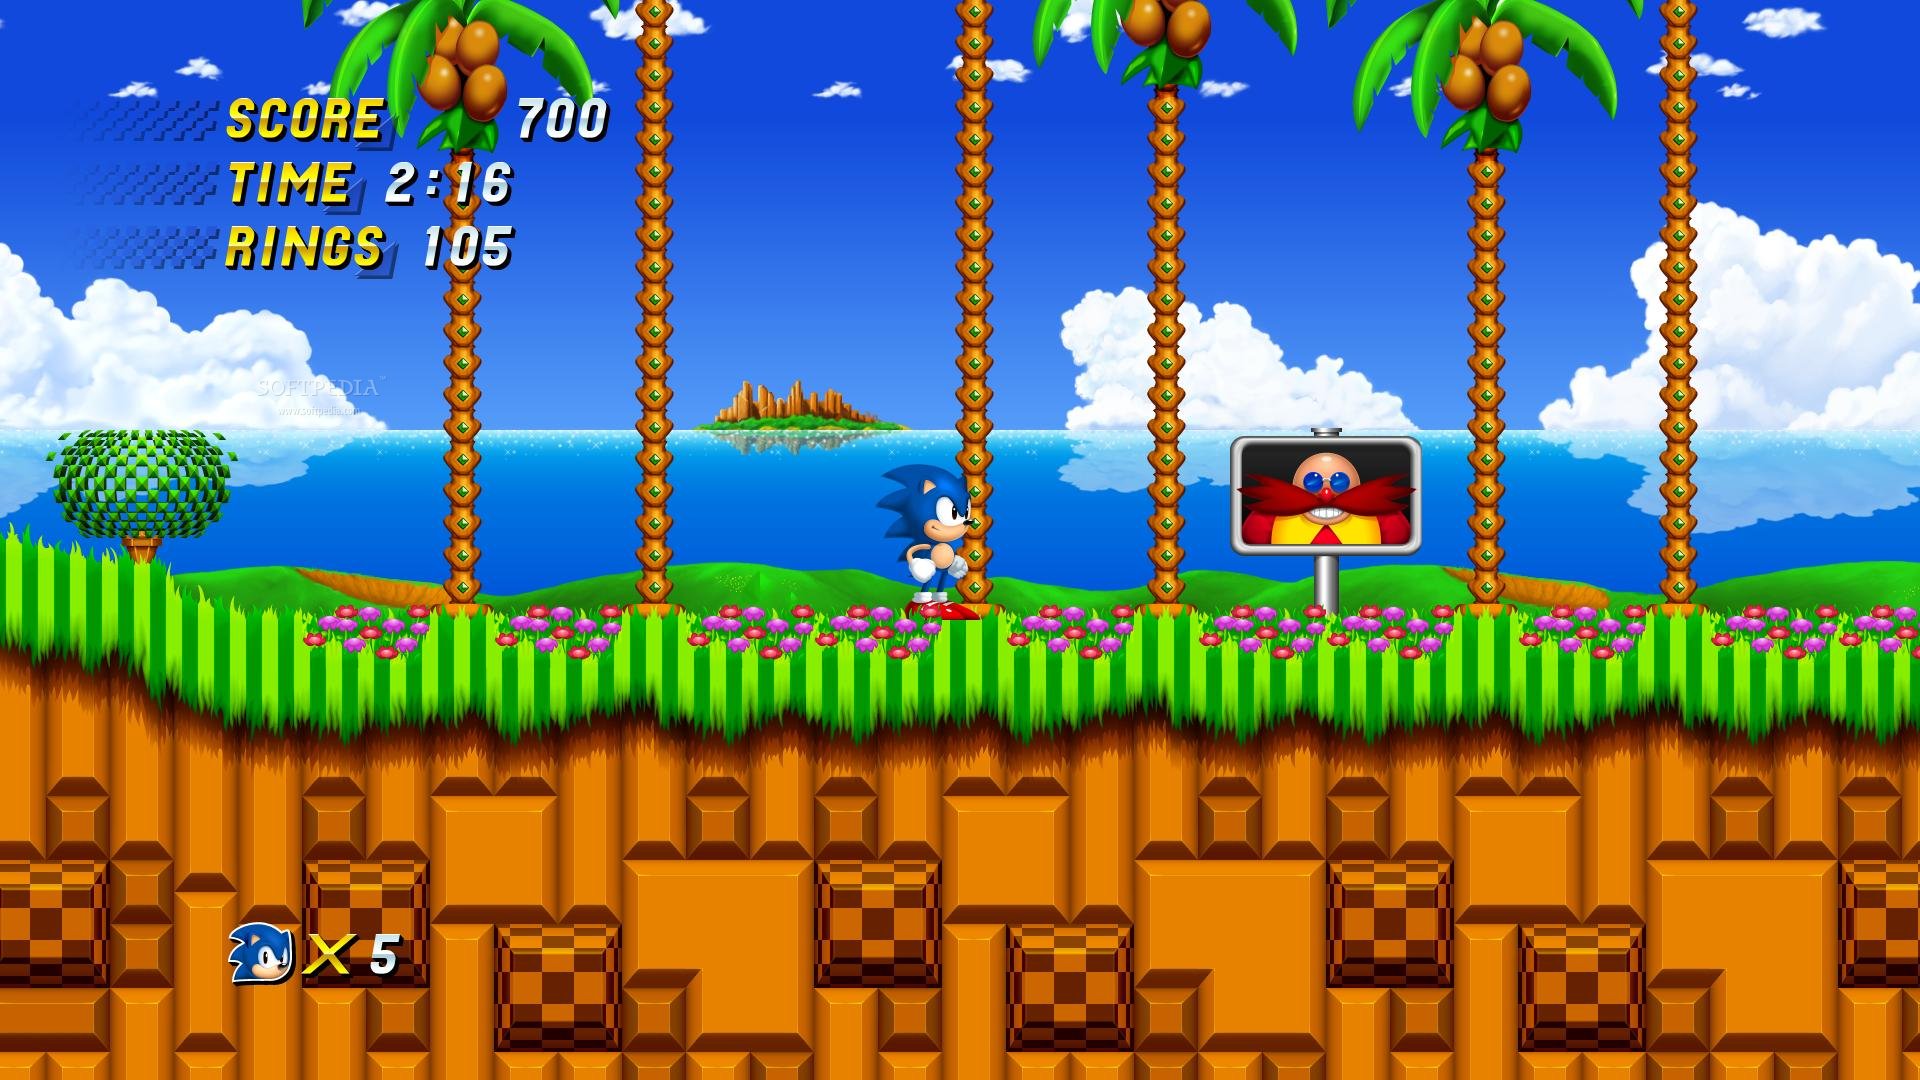 Sonic 2 HD Demo 2.0